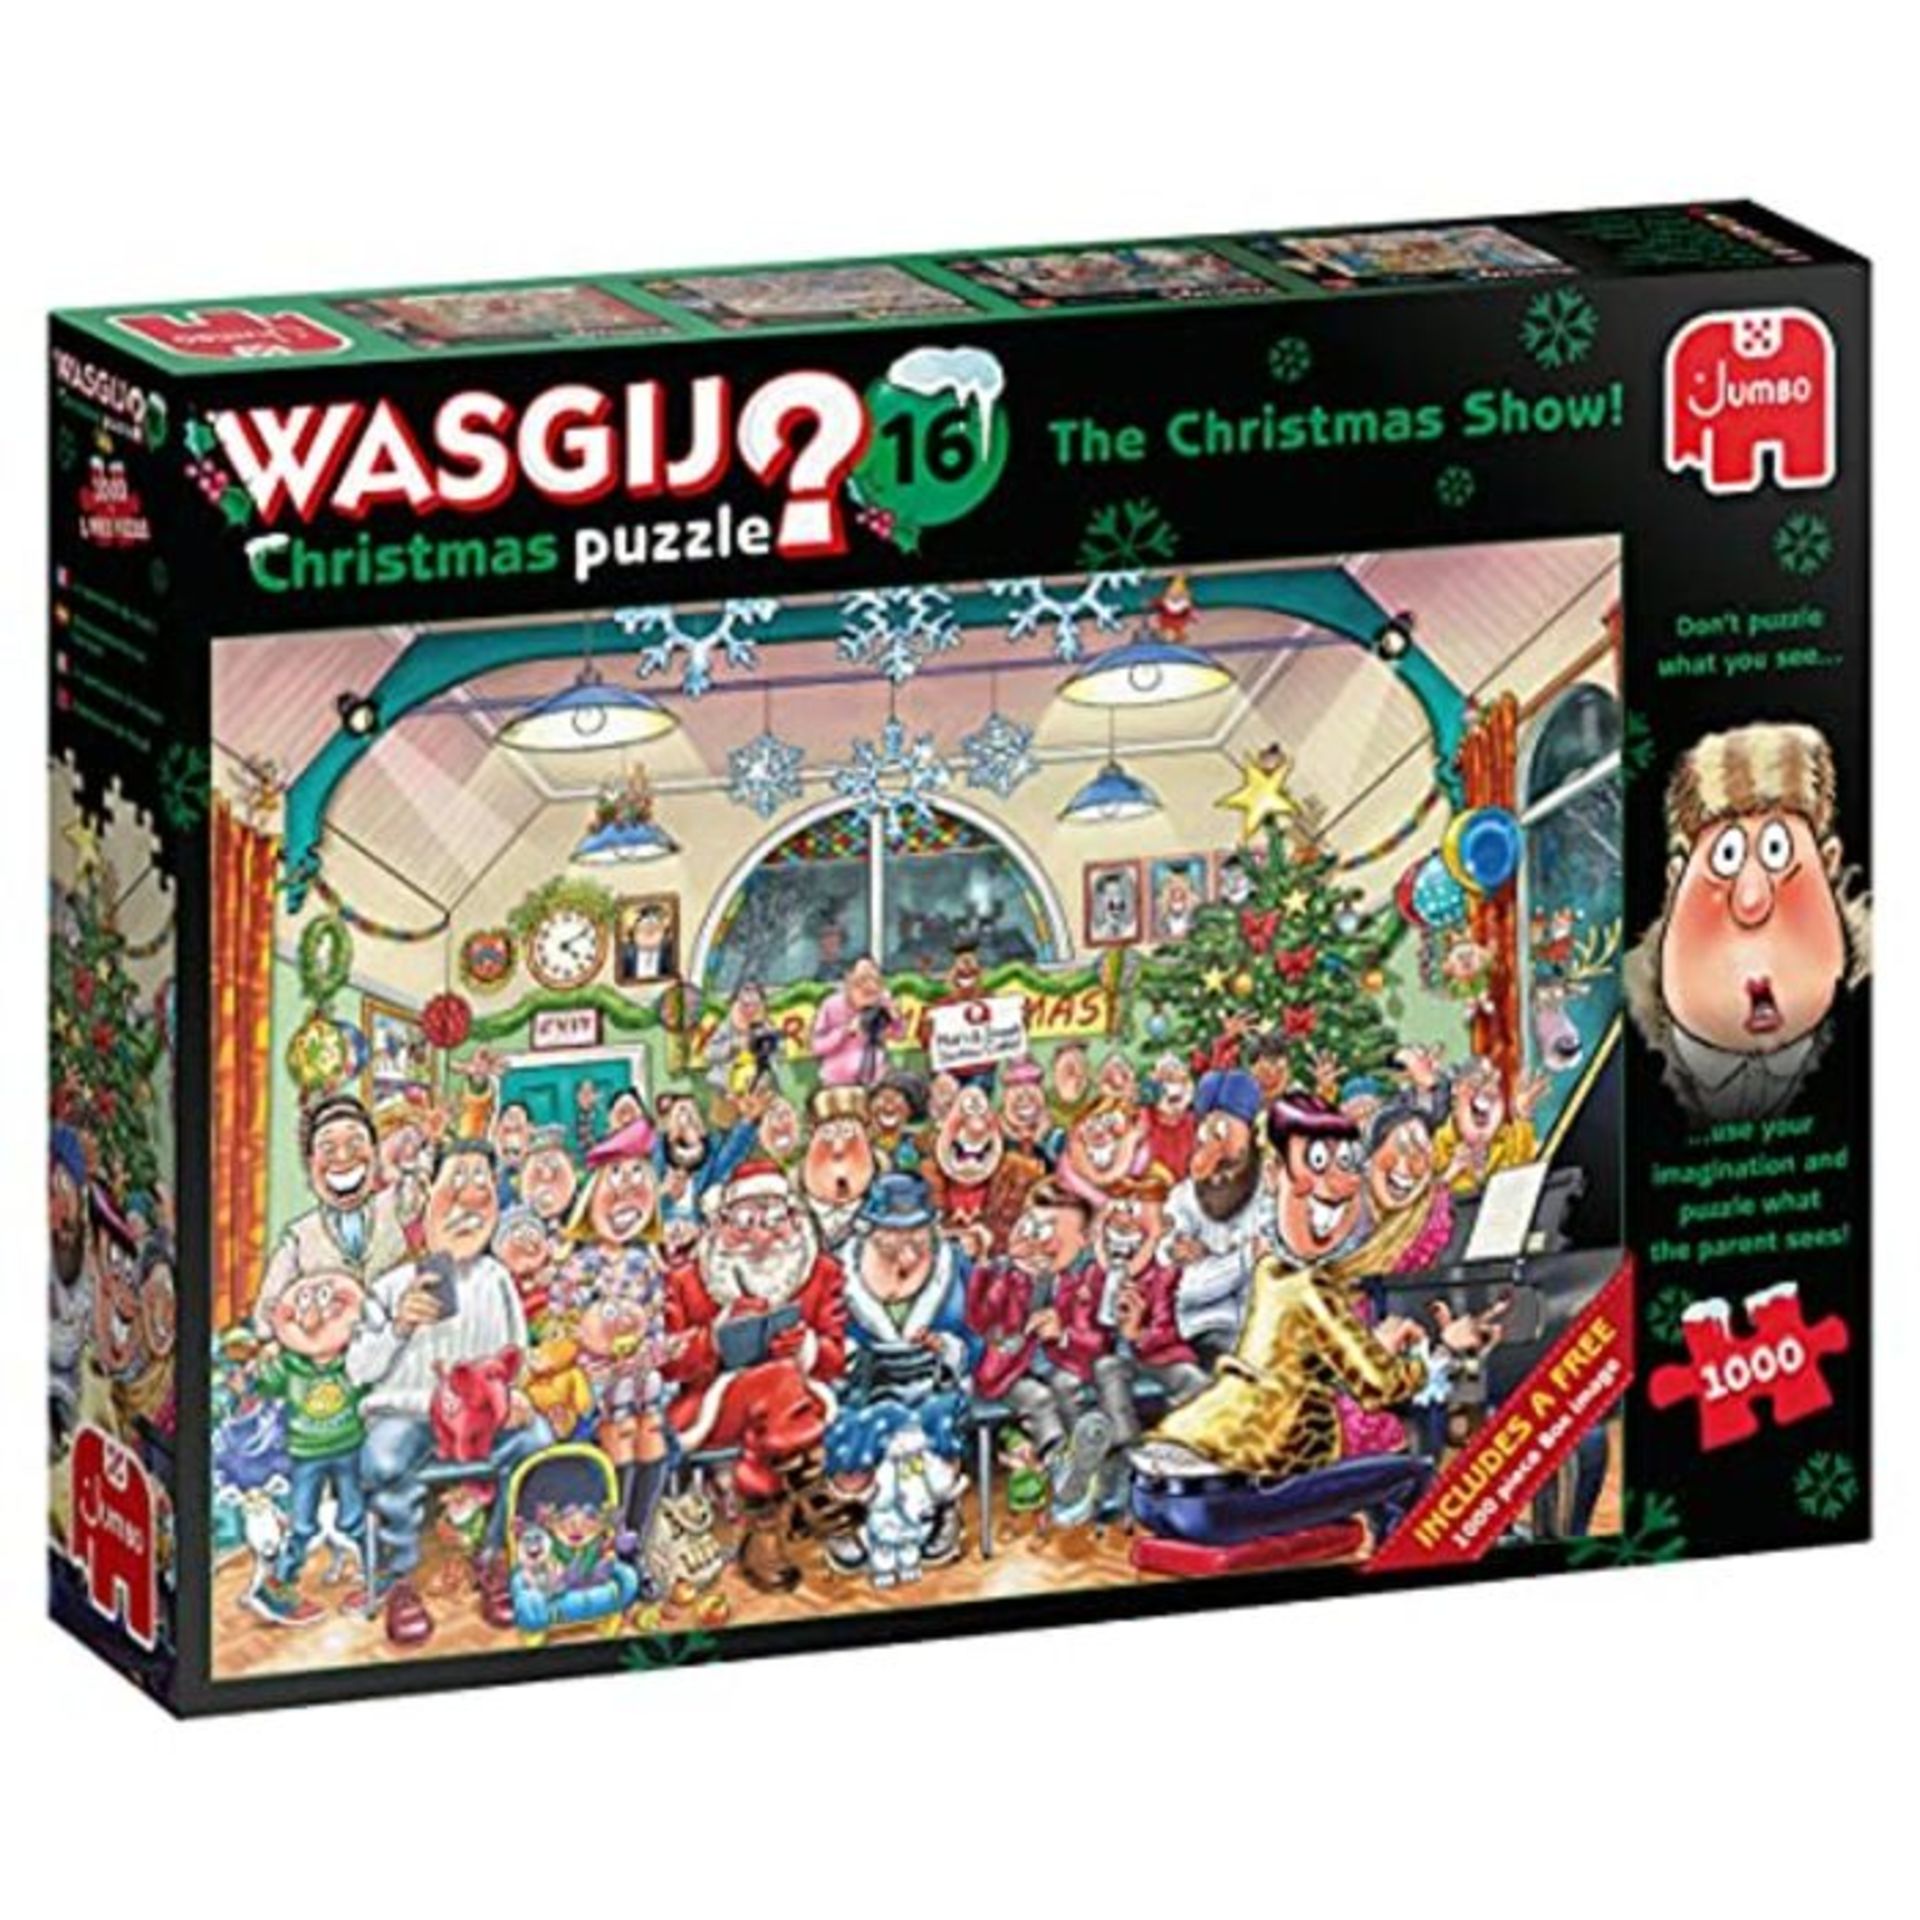 Jumbo, Wasgij, Original 16 - The Christmas Show, Jigsaw Puzzles for Adults, 1,000 piec